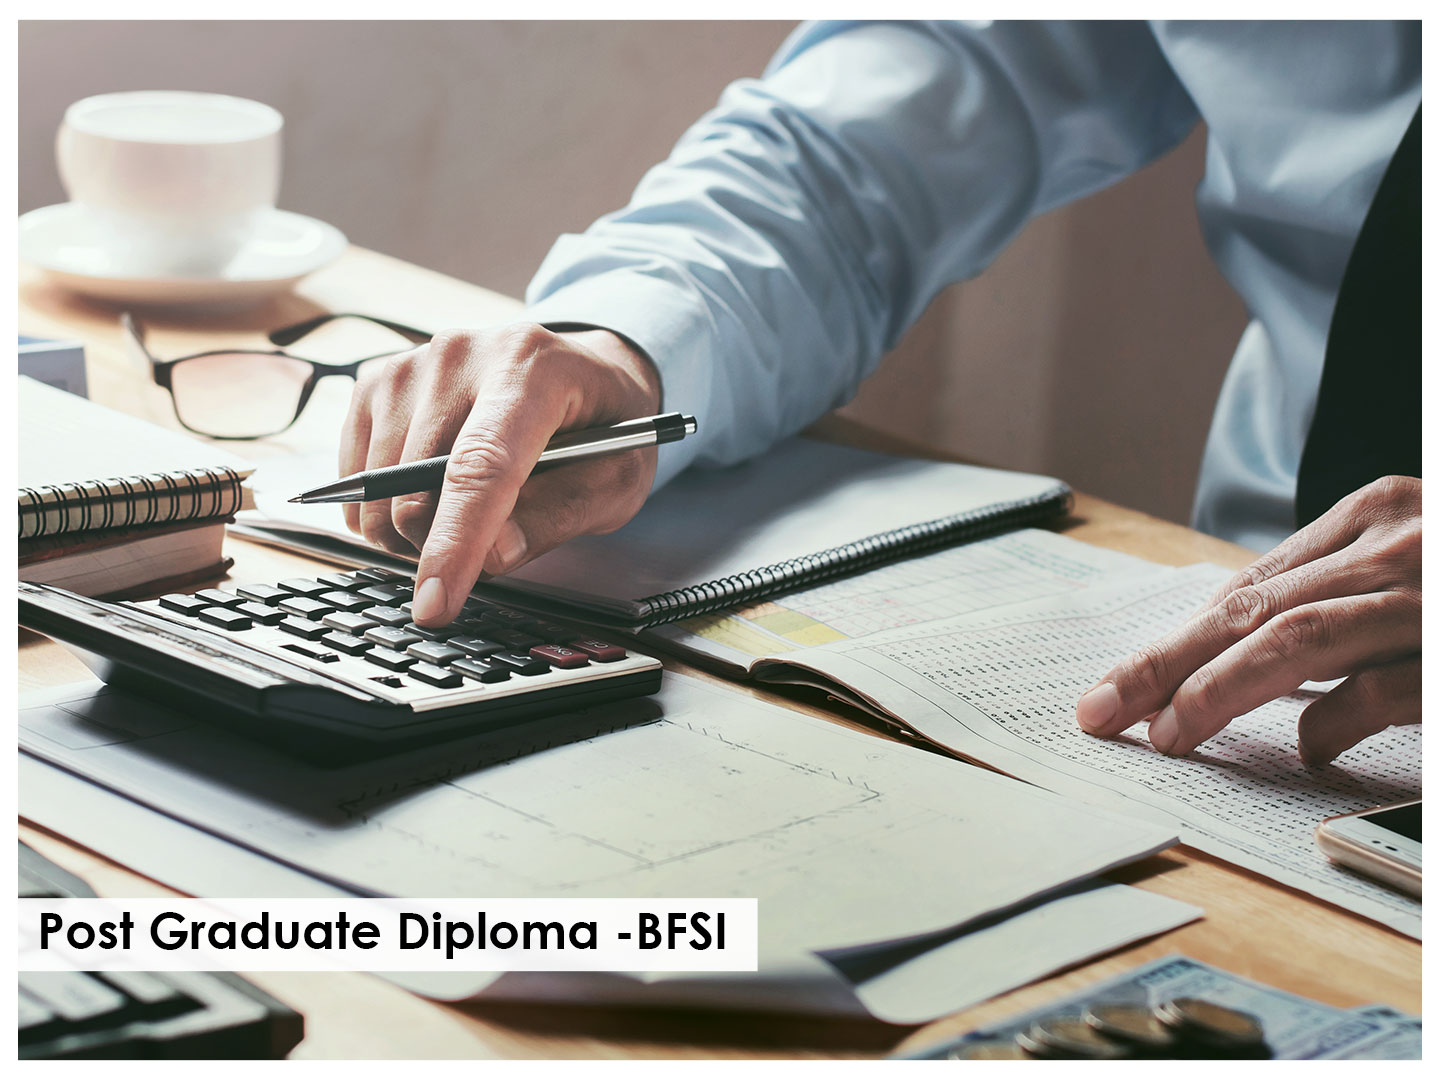 PG Diploma in Banking, Financial & Insurance (BFSI)